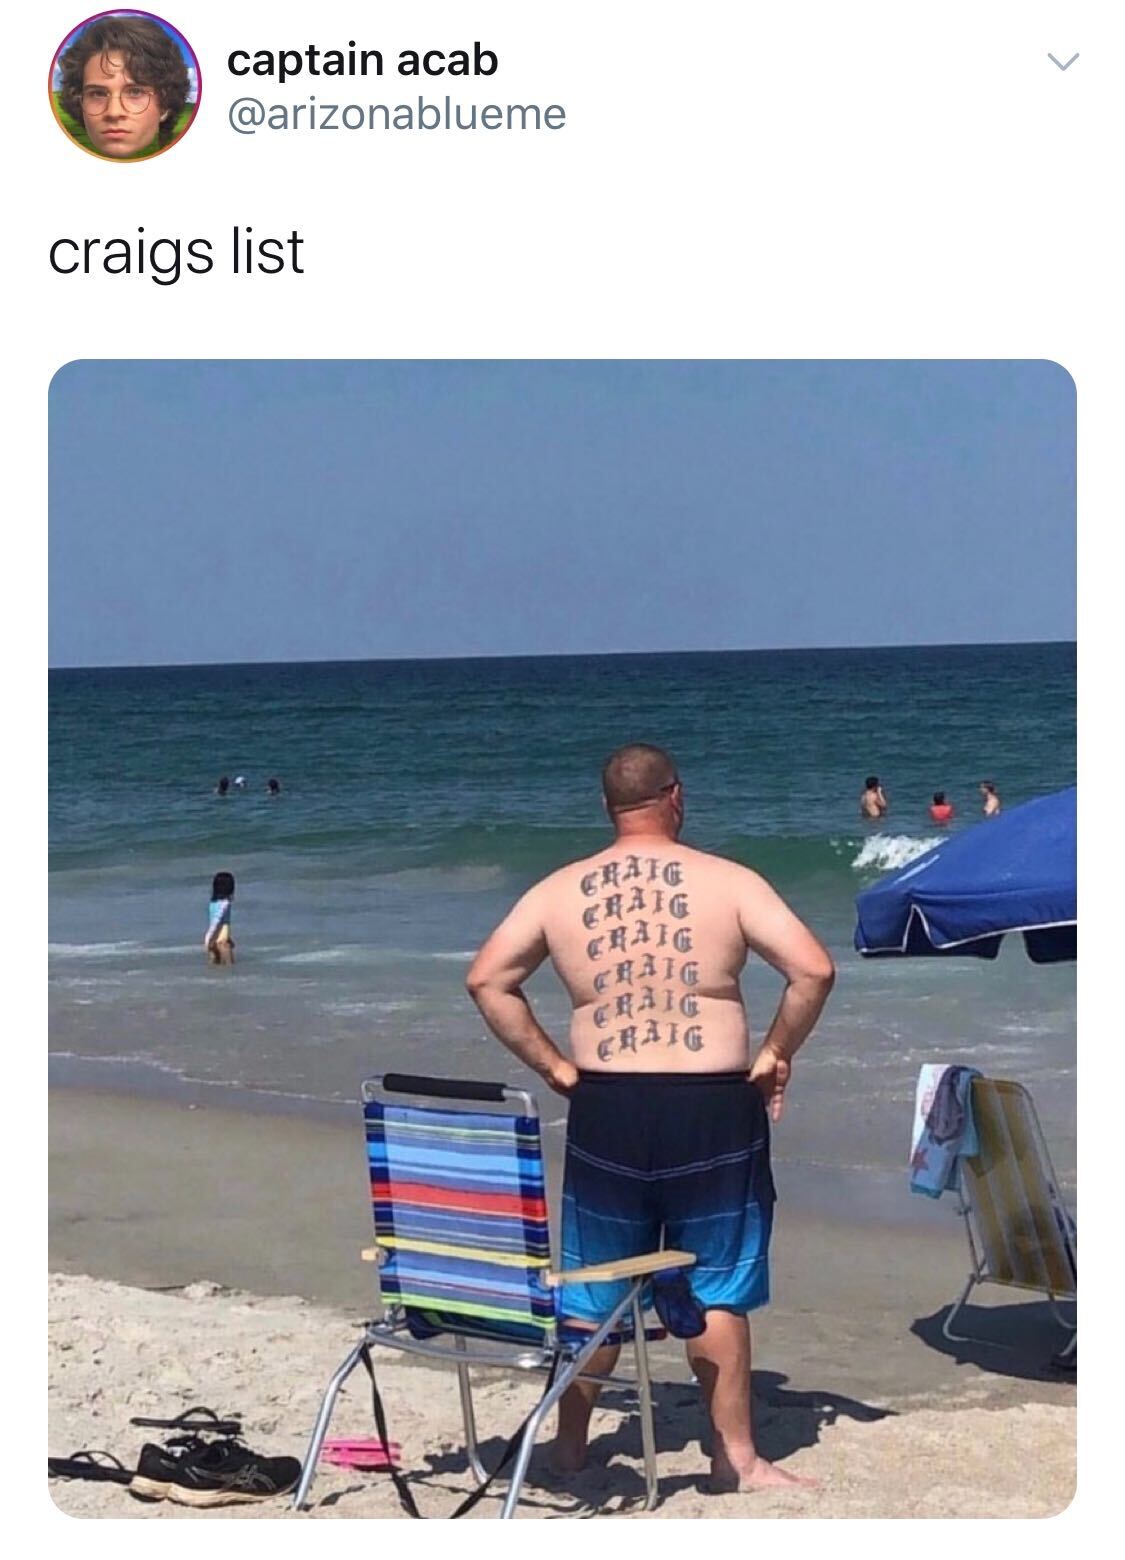 craig tattoo on back - v captain acab craigs list Craig Craig Hig Raig Craig Craig